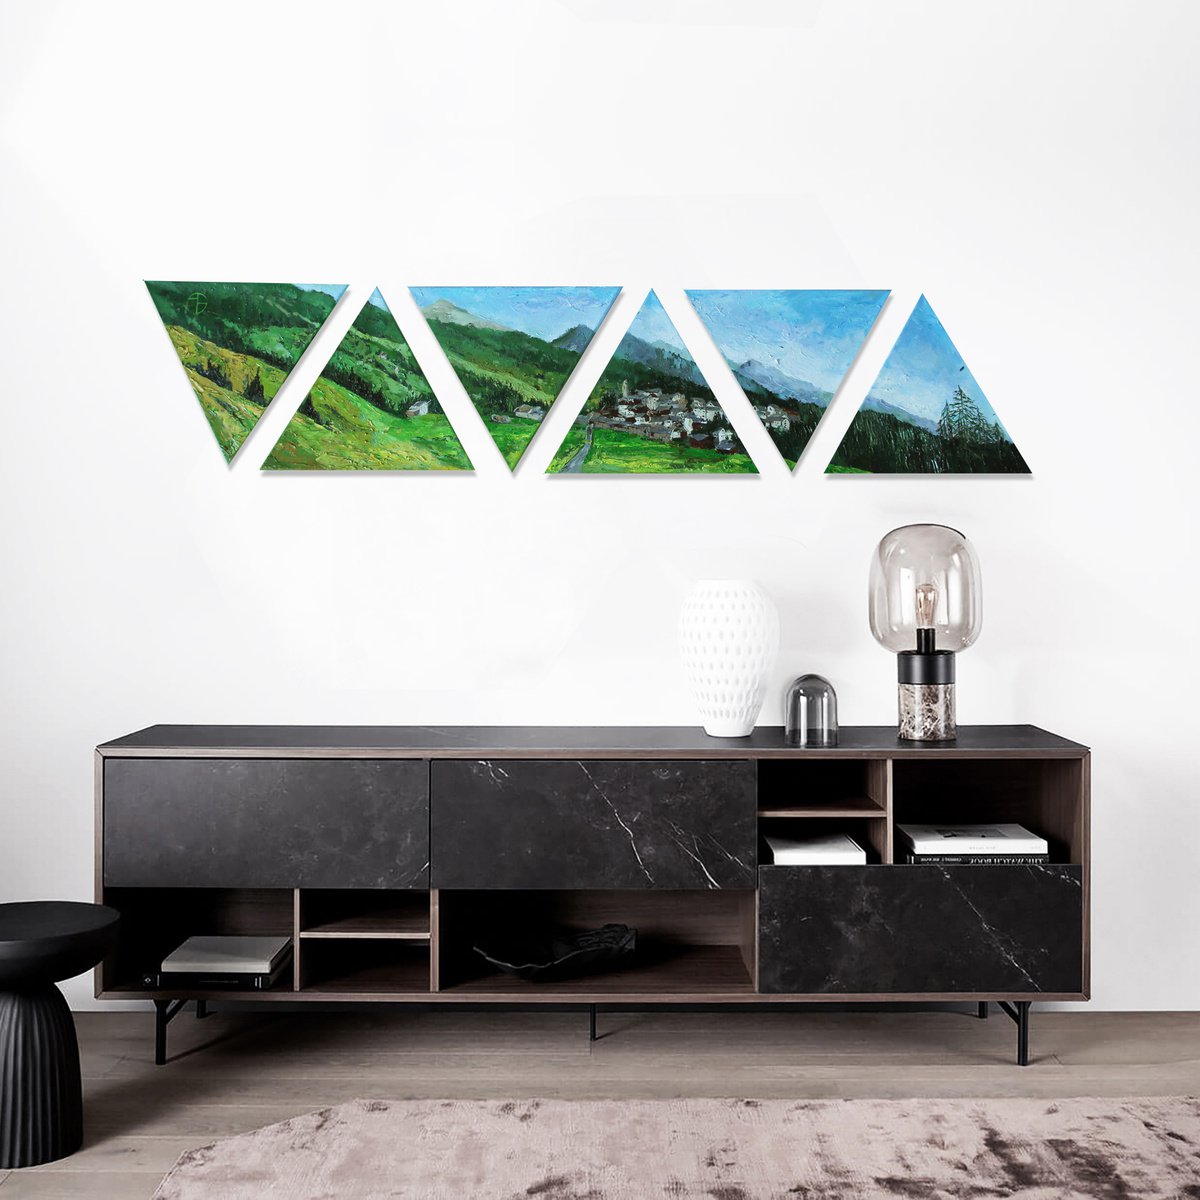 MOUNTAINS / Bosco Gurin / Switzerland / green / triangle / by Anna Bo